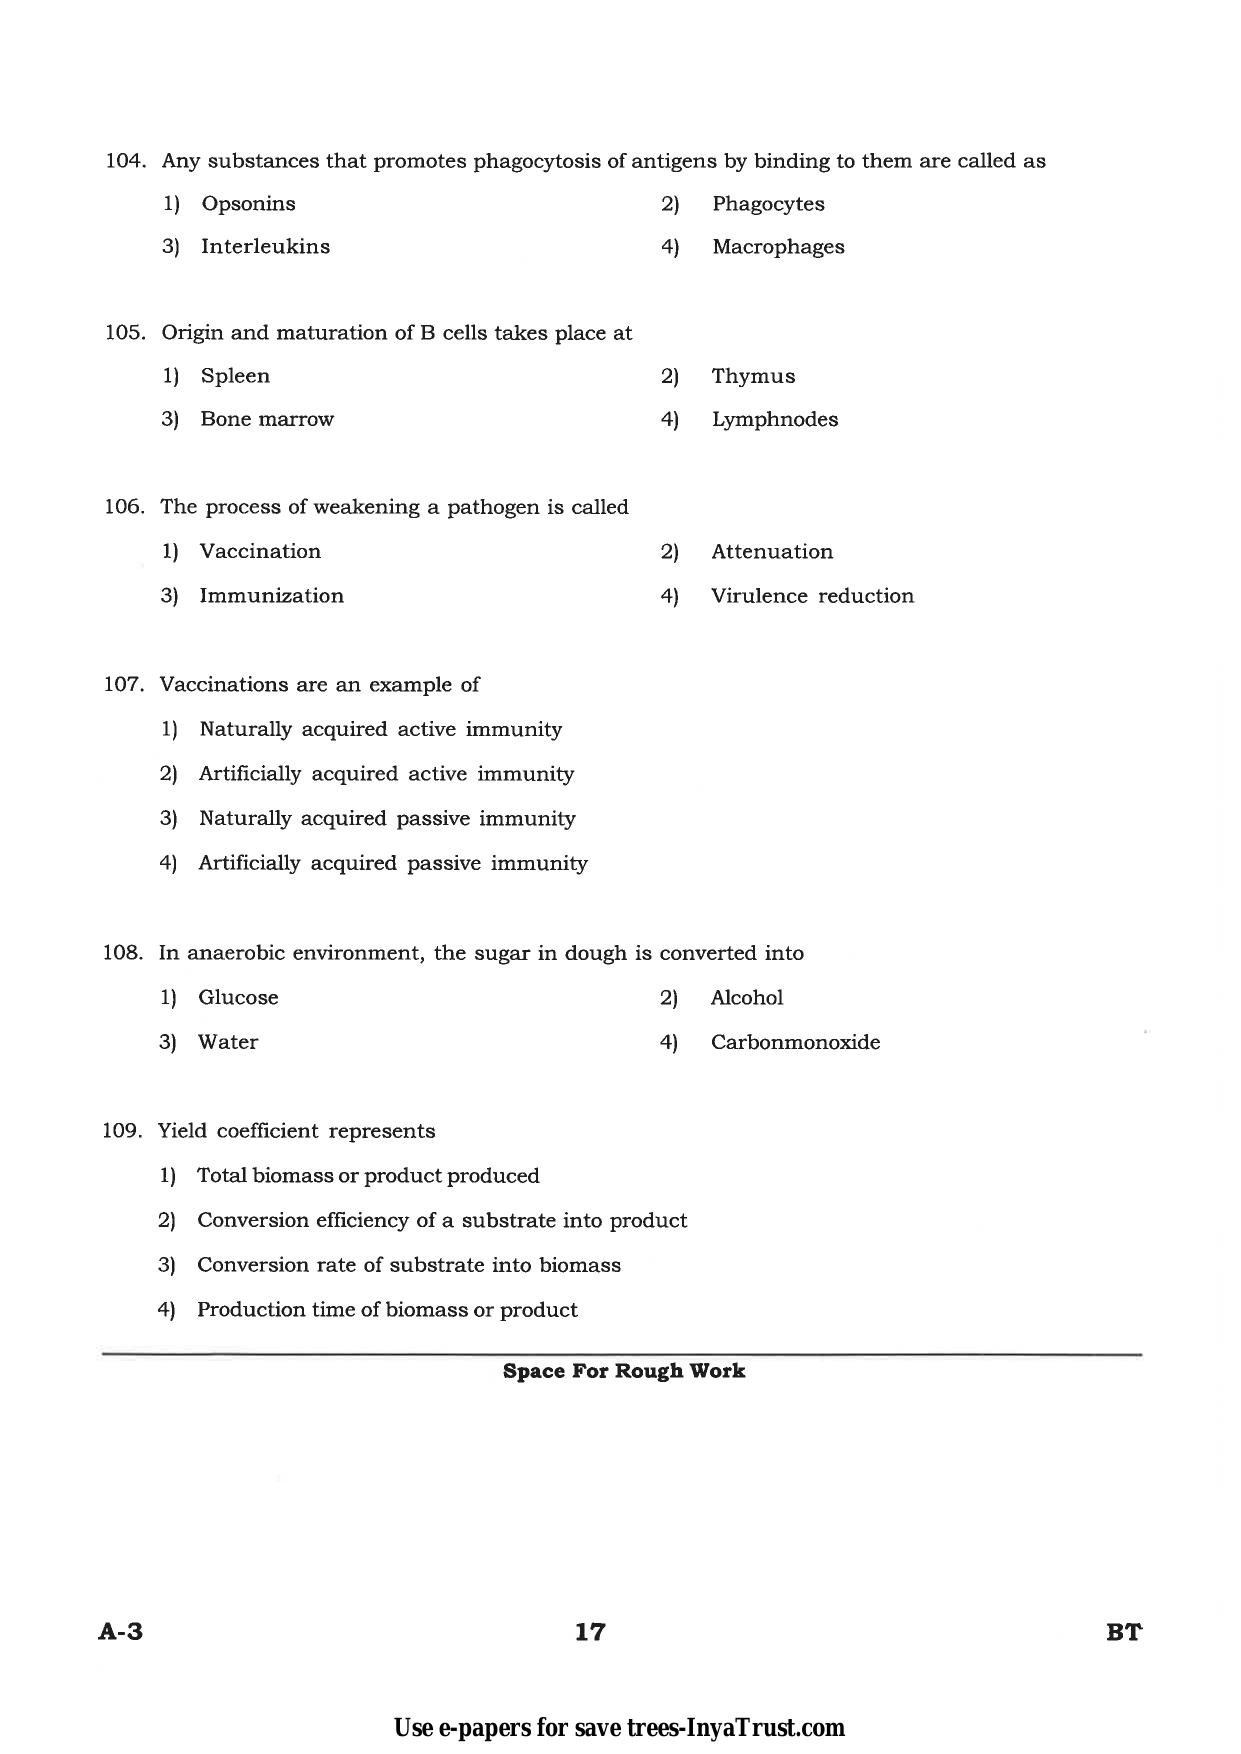 Karnataka Diploma CET- 2015 Biotechnology Question Paper - Page 17